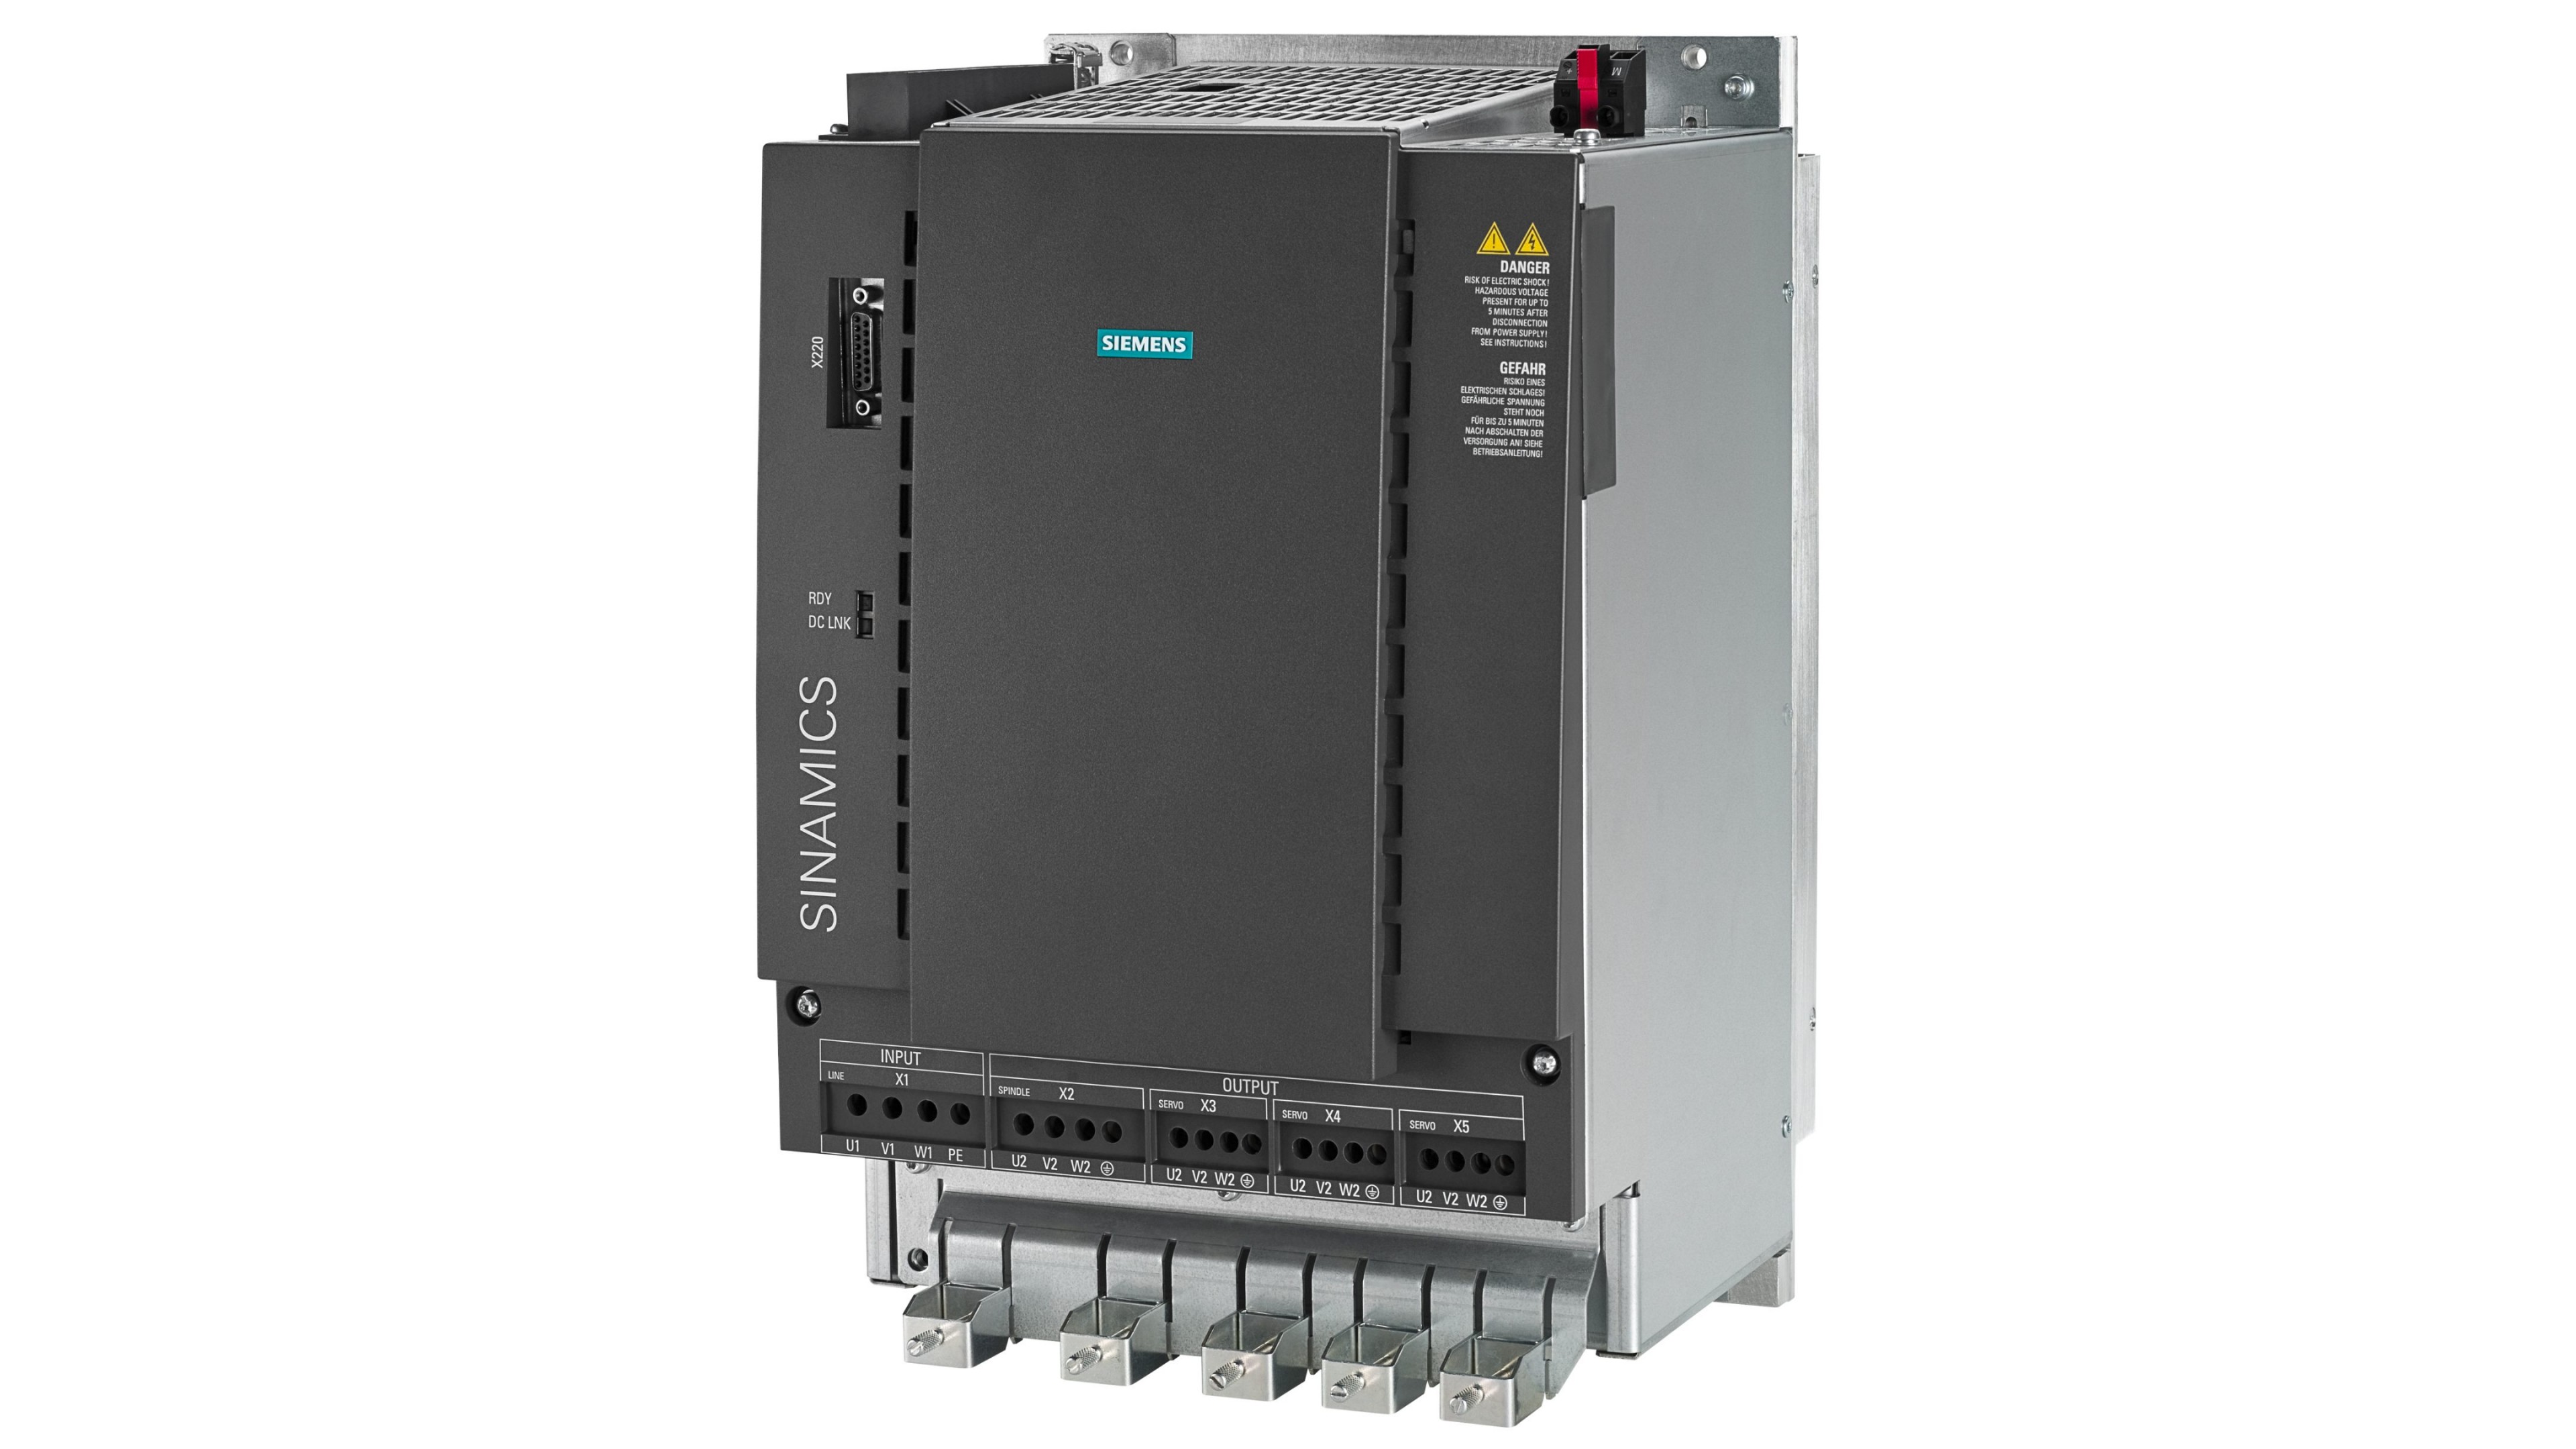 Siemens 840d solution line download for mac